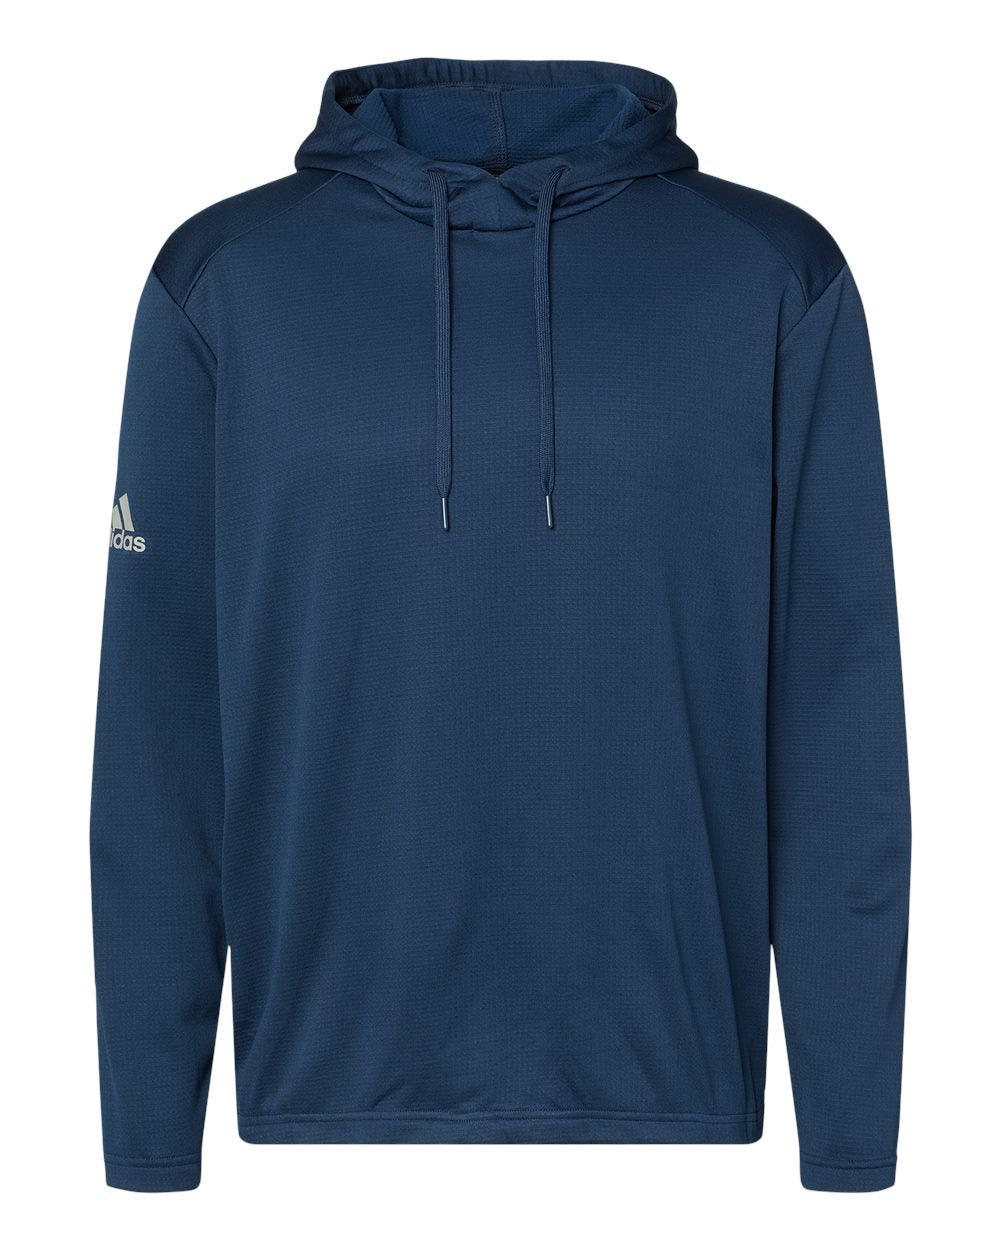 Adidas A530 Textured Mixed Media Hooded Sweatshirt #color_Collegiate Navy